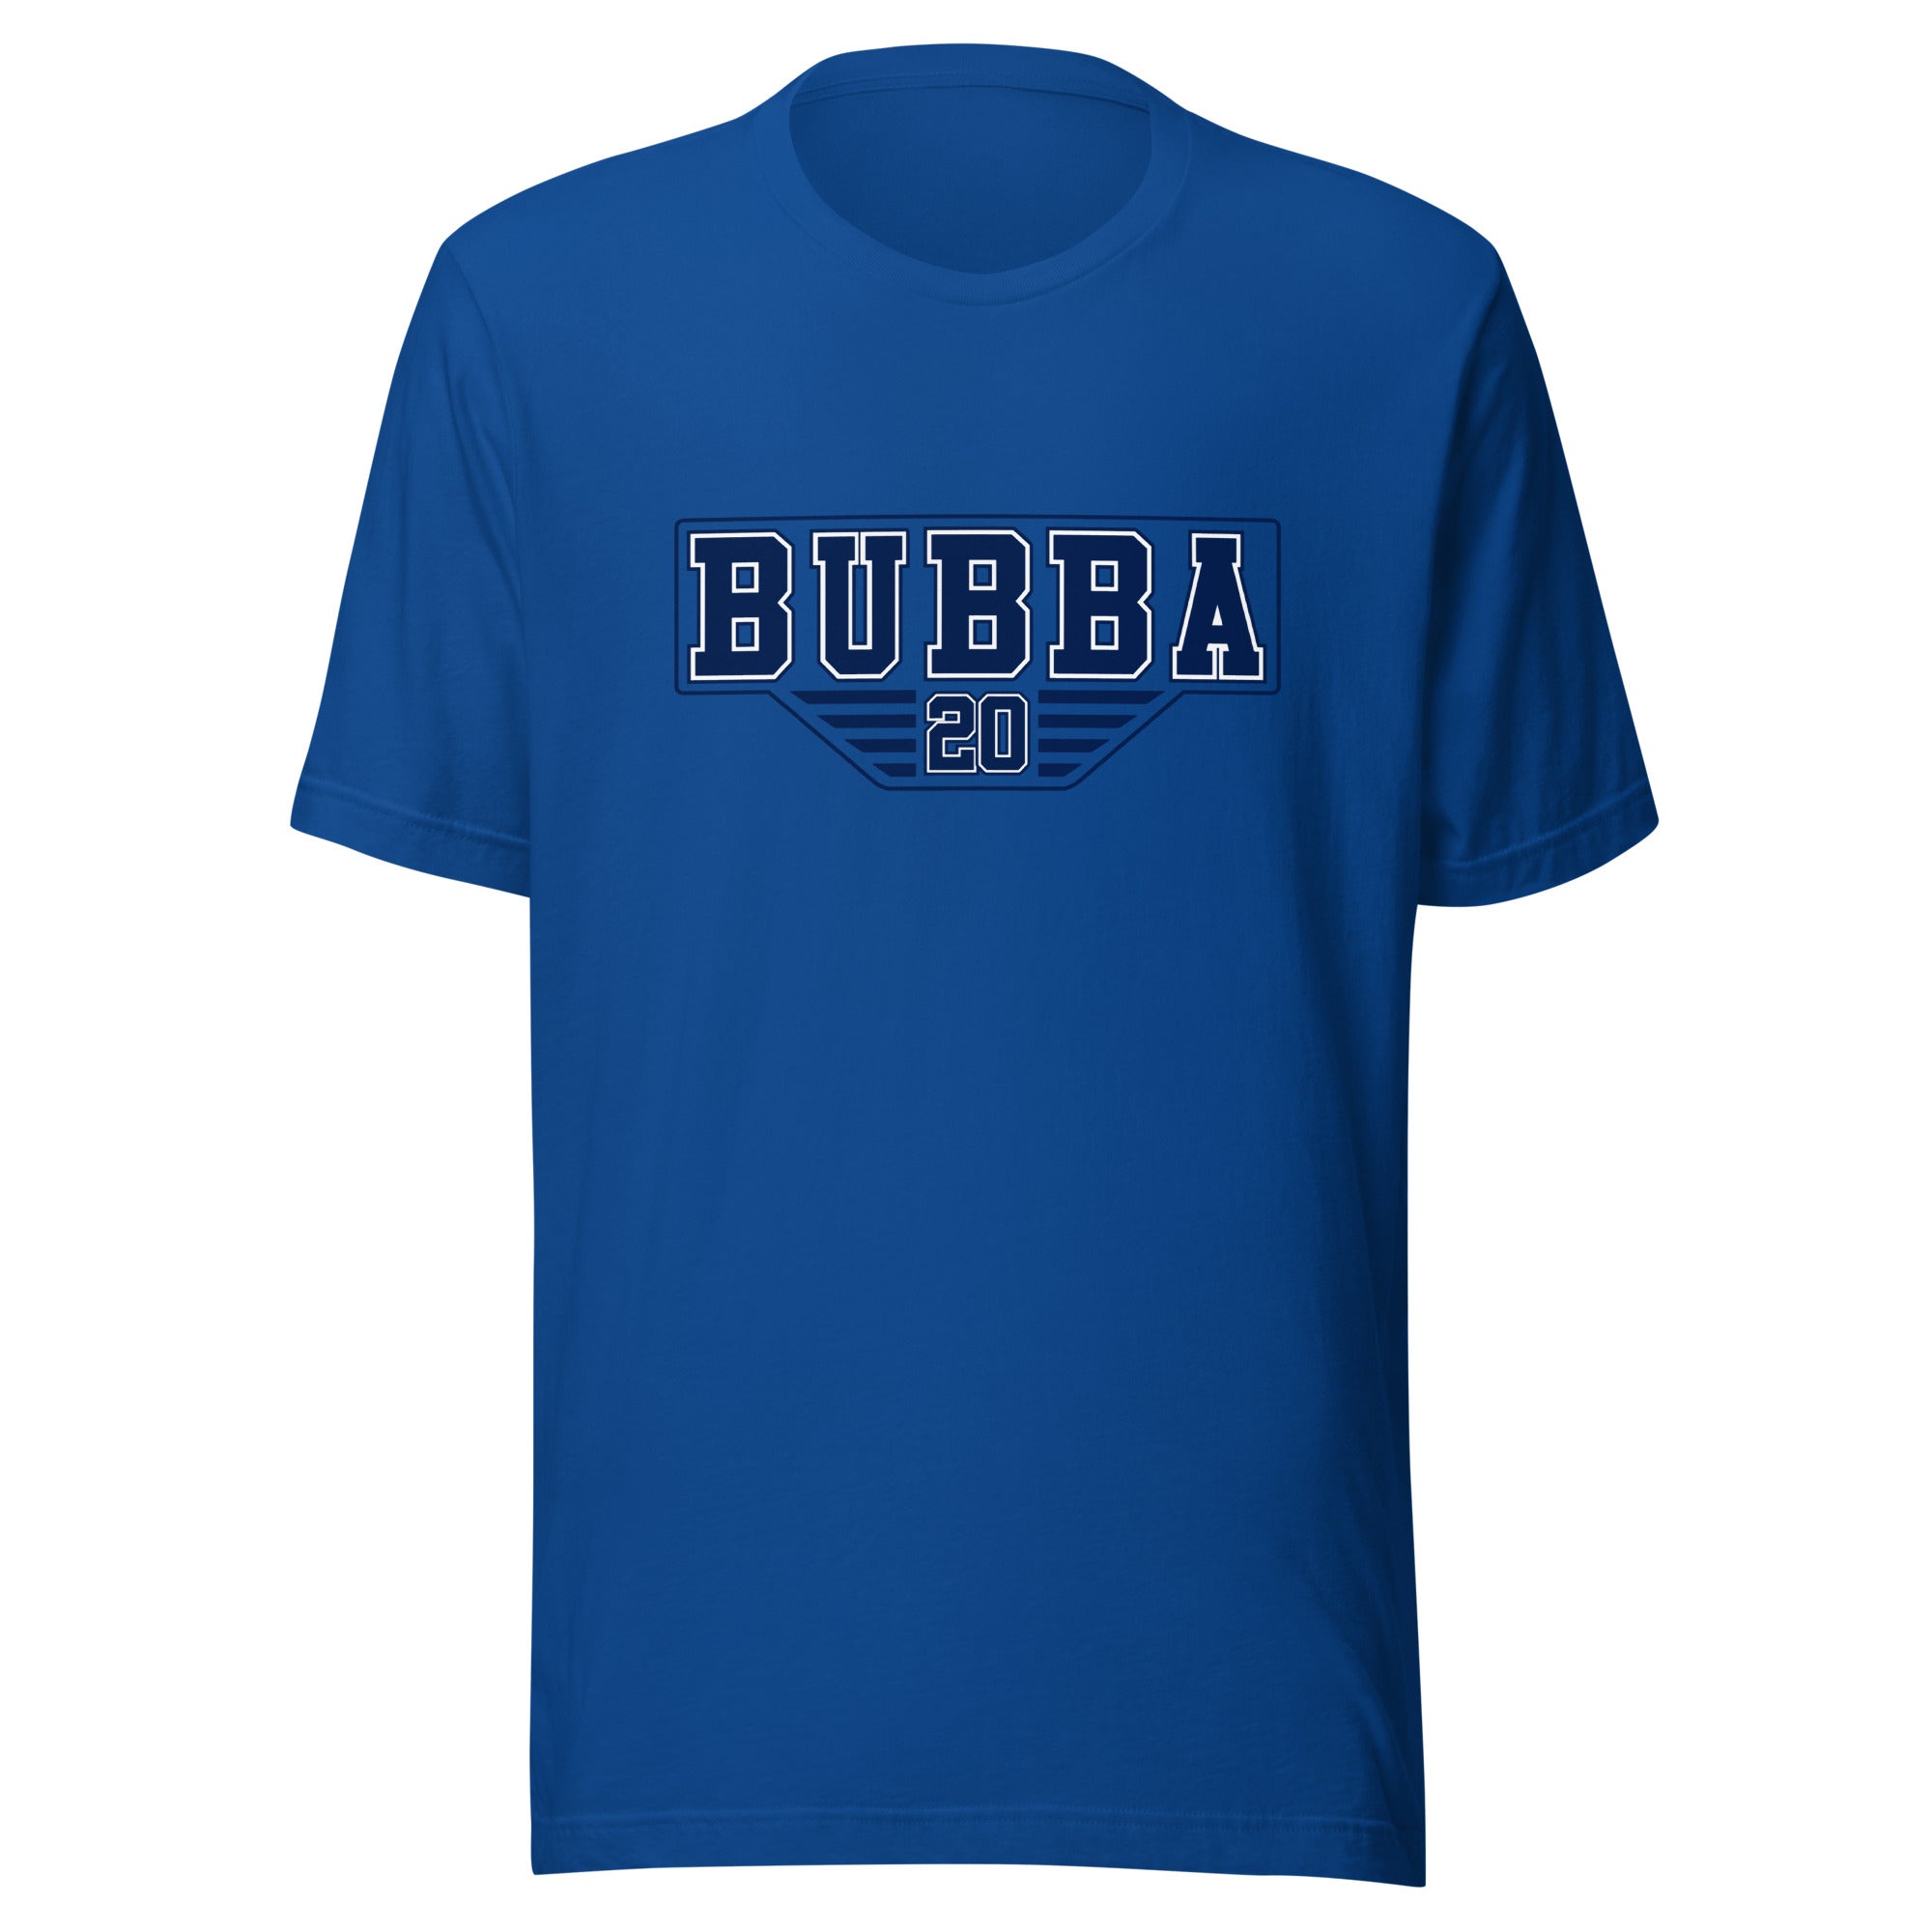 Bubba #20 - Unisex t-shirt